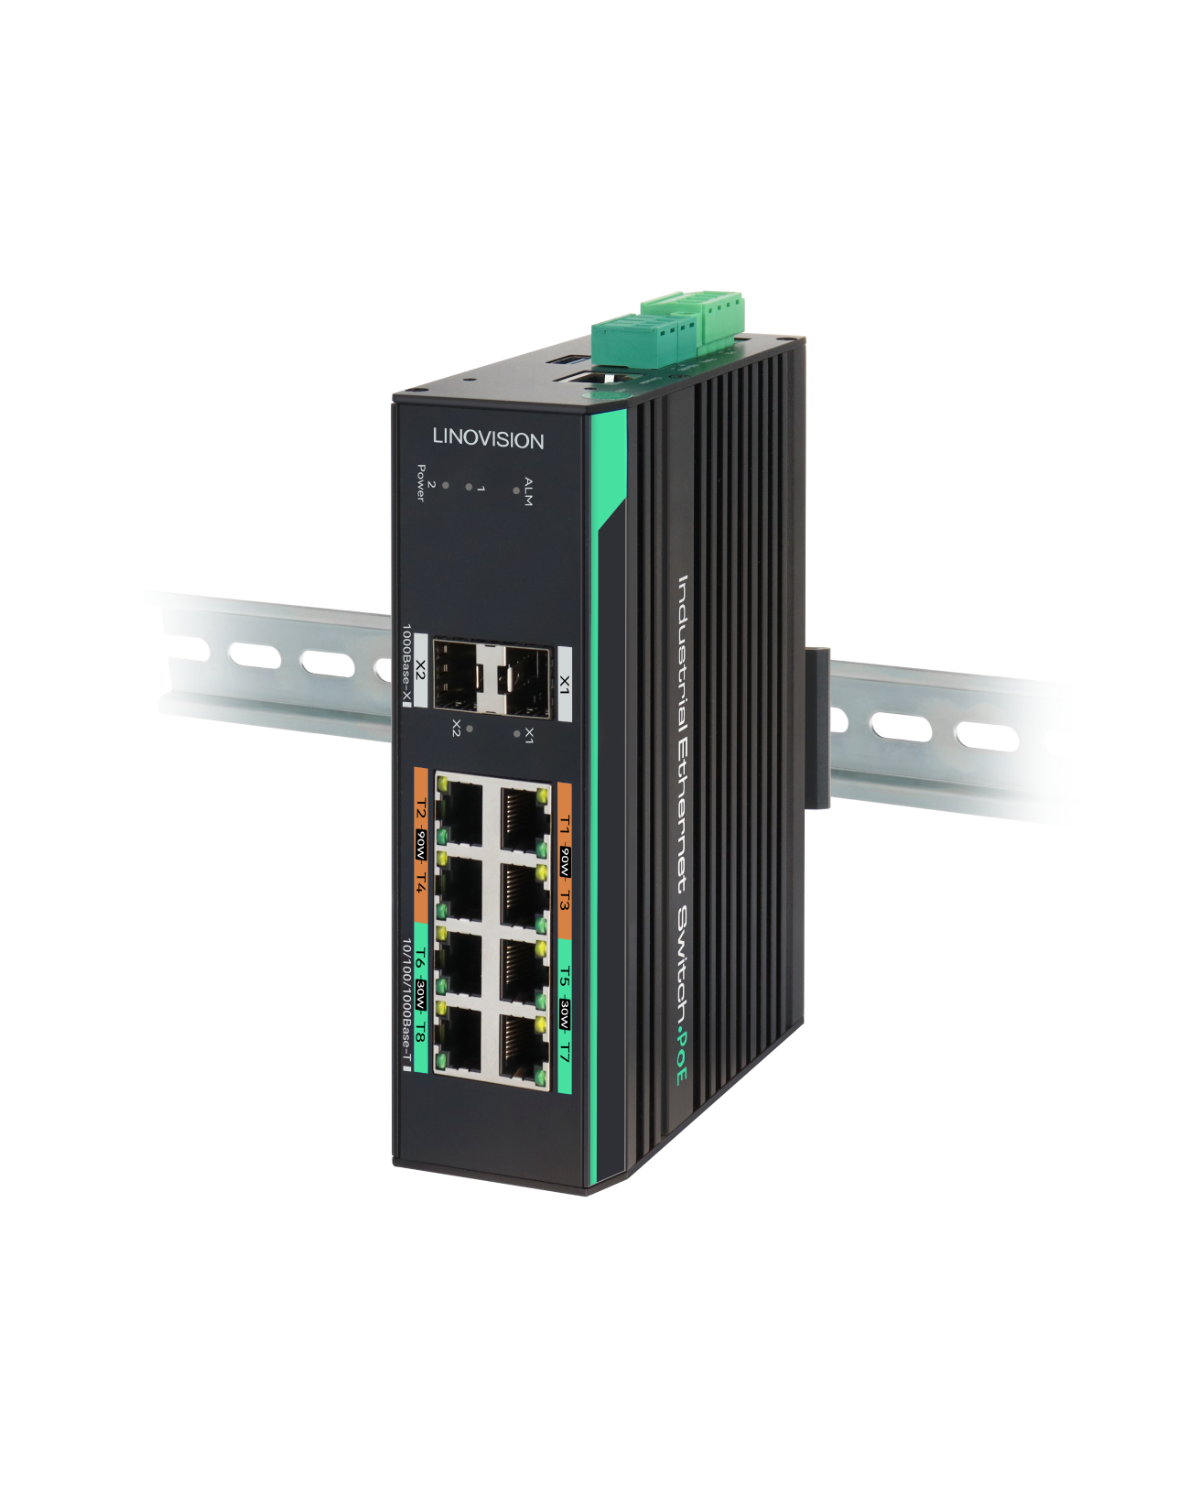 8 Ports Full Gigabit Managed PoE Switch with 2 Gigabit SFP Uplinks, 4 BT 90W PoE Ports